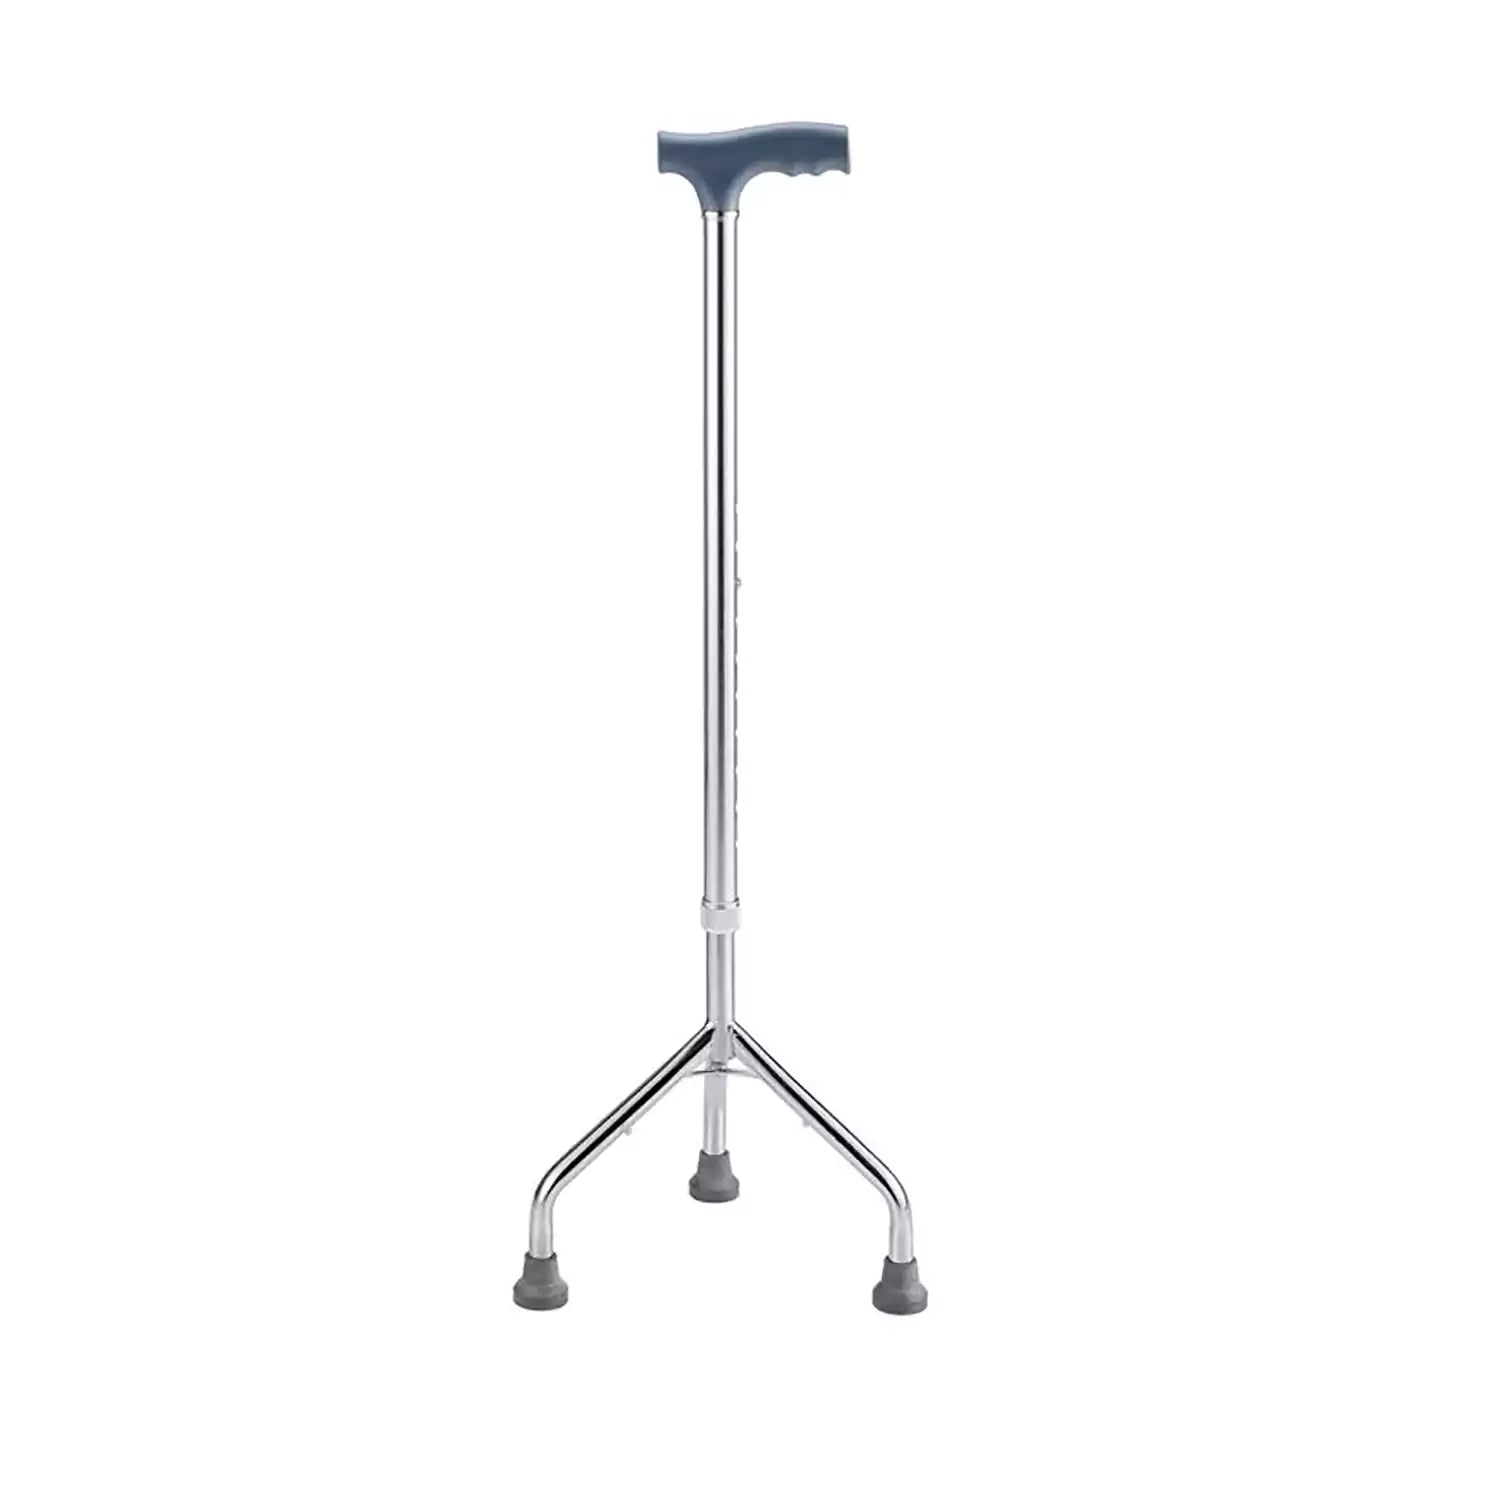 VMS Careline Walking Stick Height Adjustable Walking Cane Stick